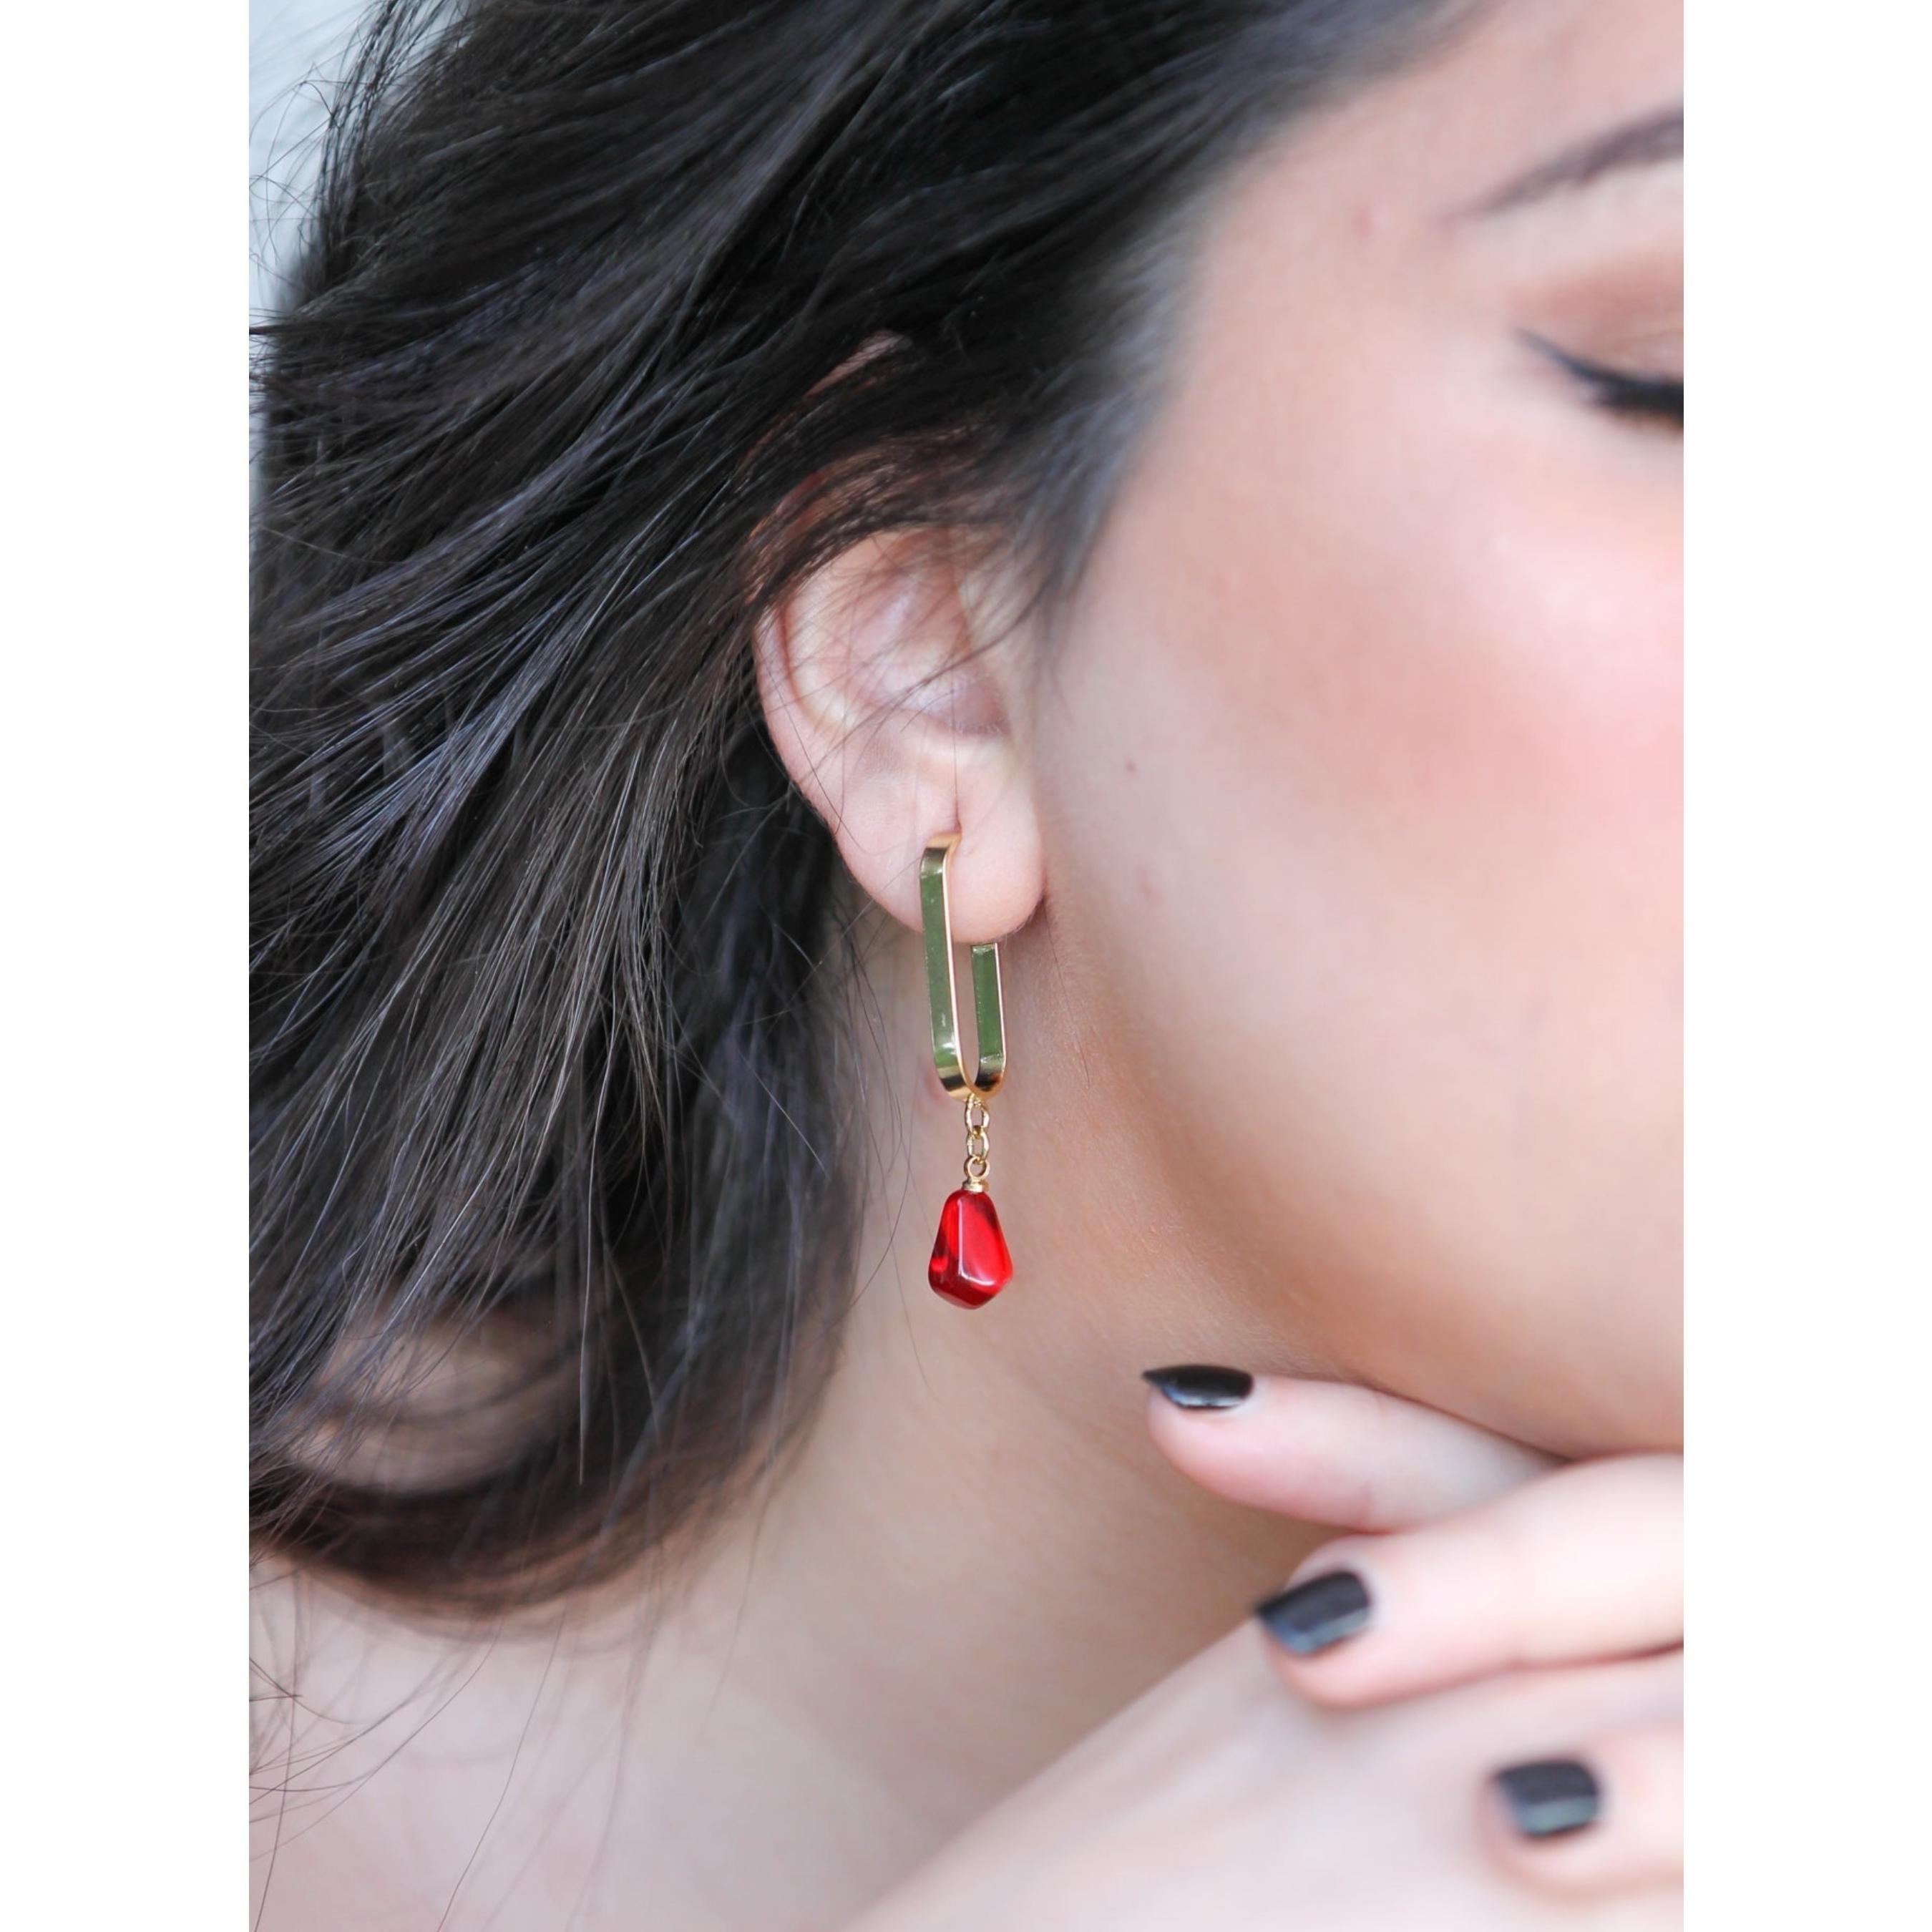 L And V earrings